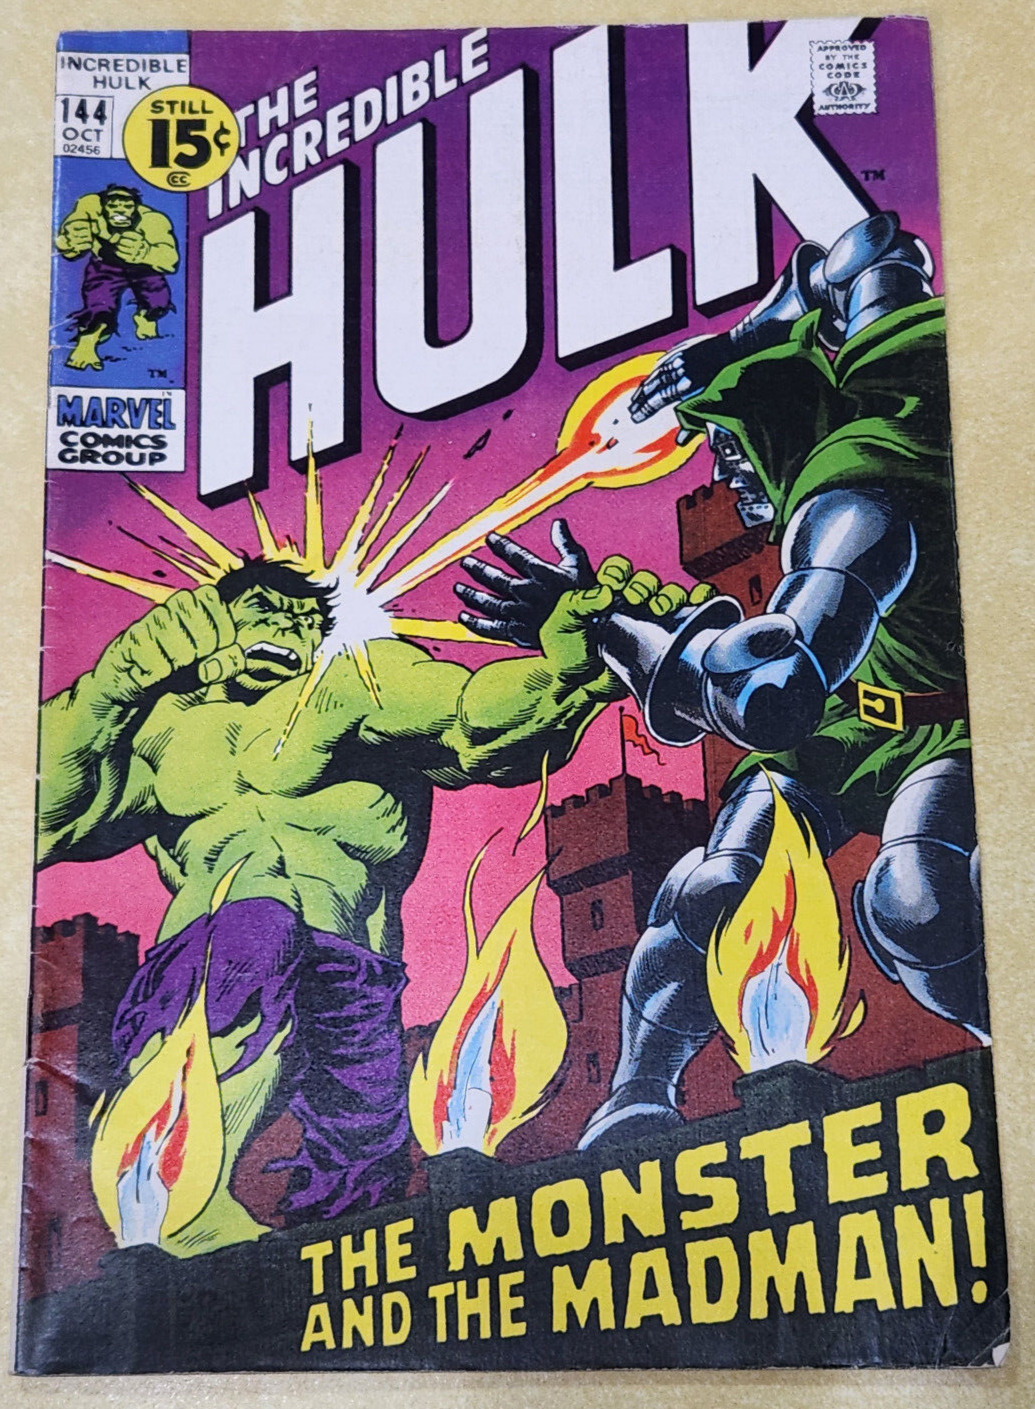 The Incredible Hulk #144, Dr. Doom